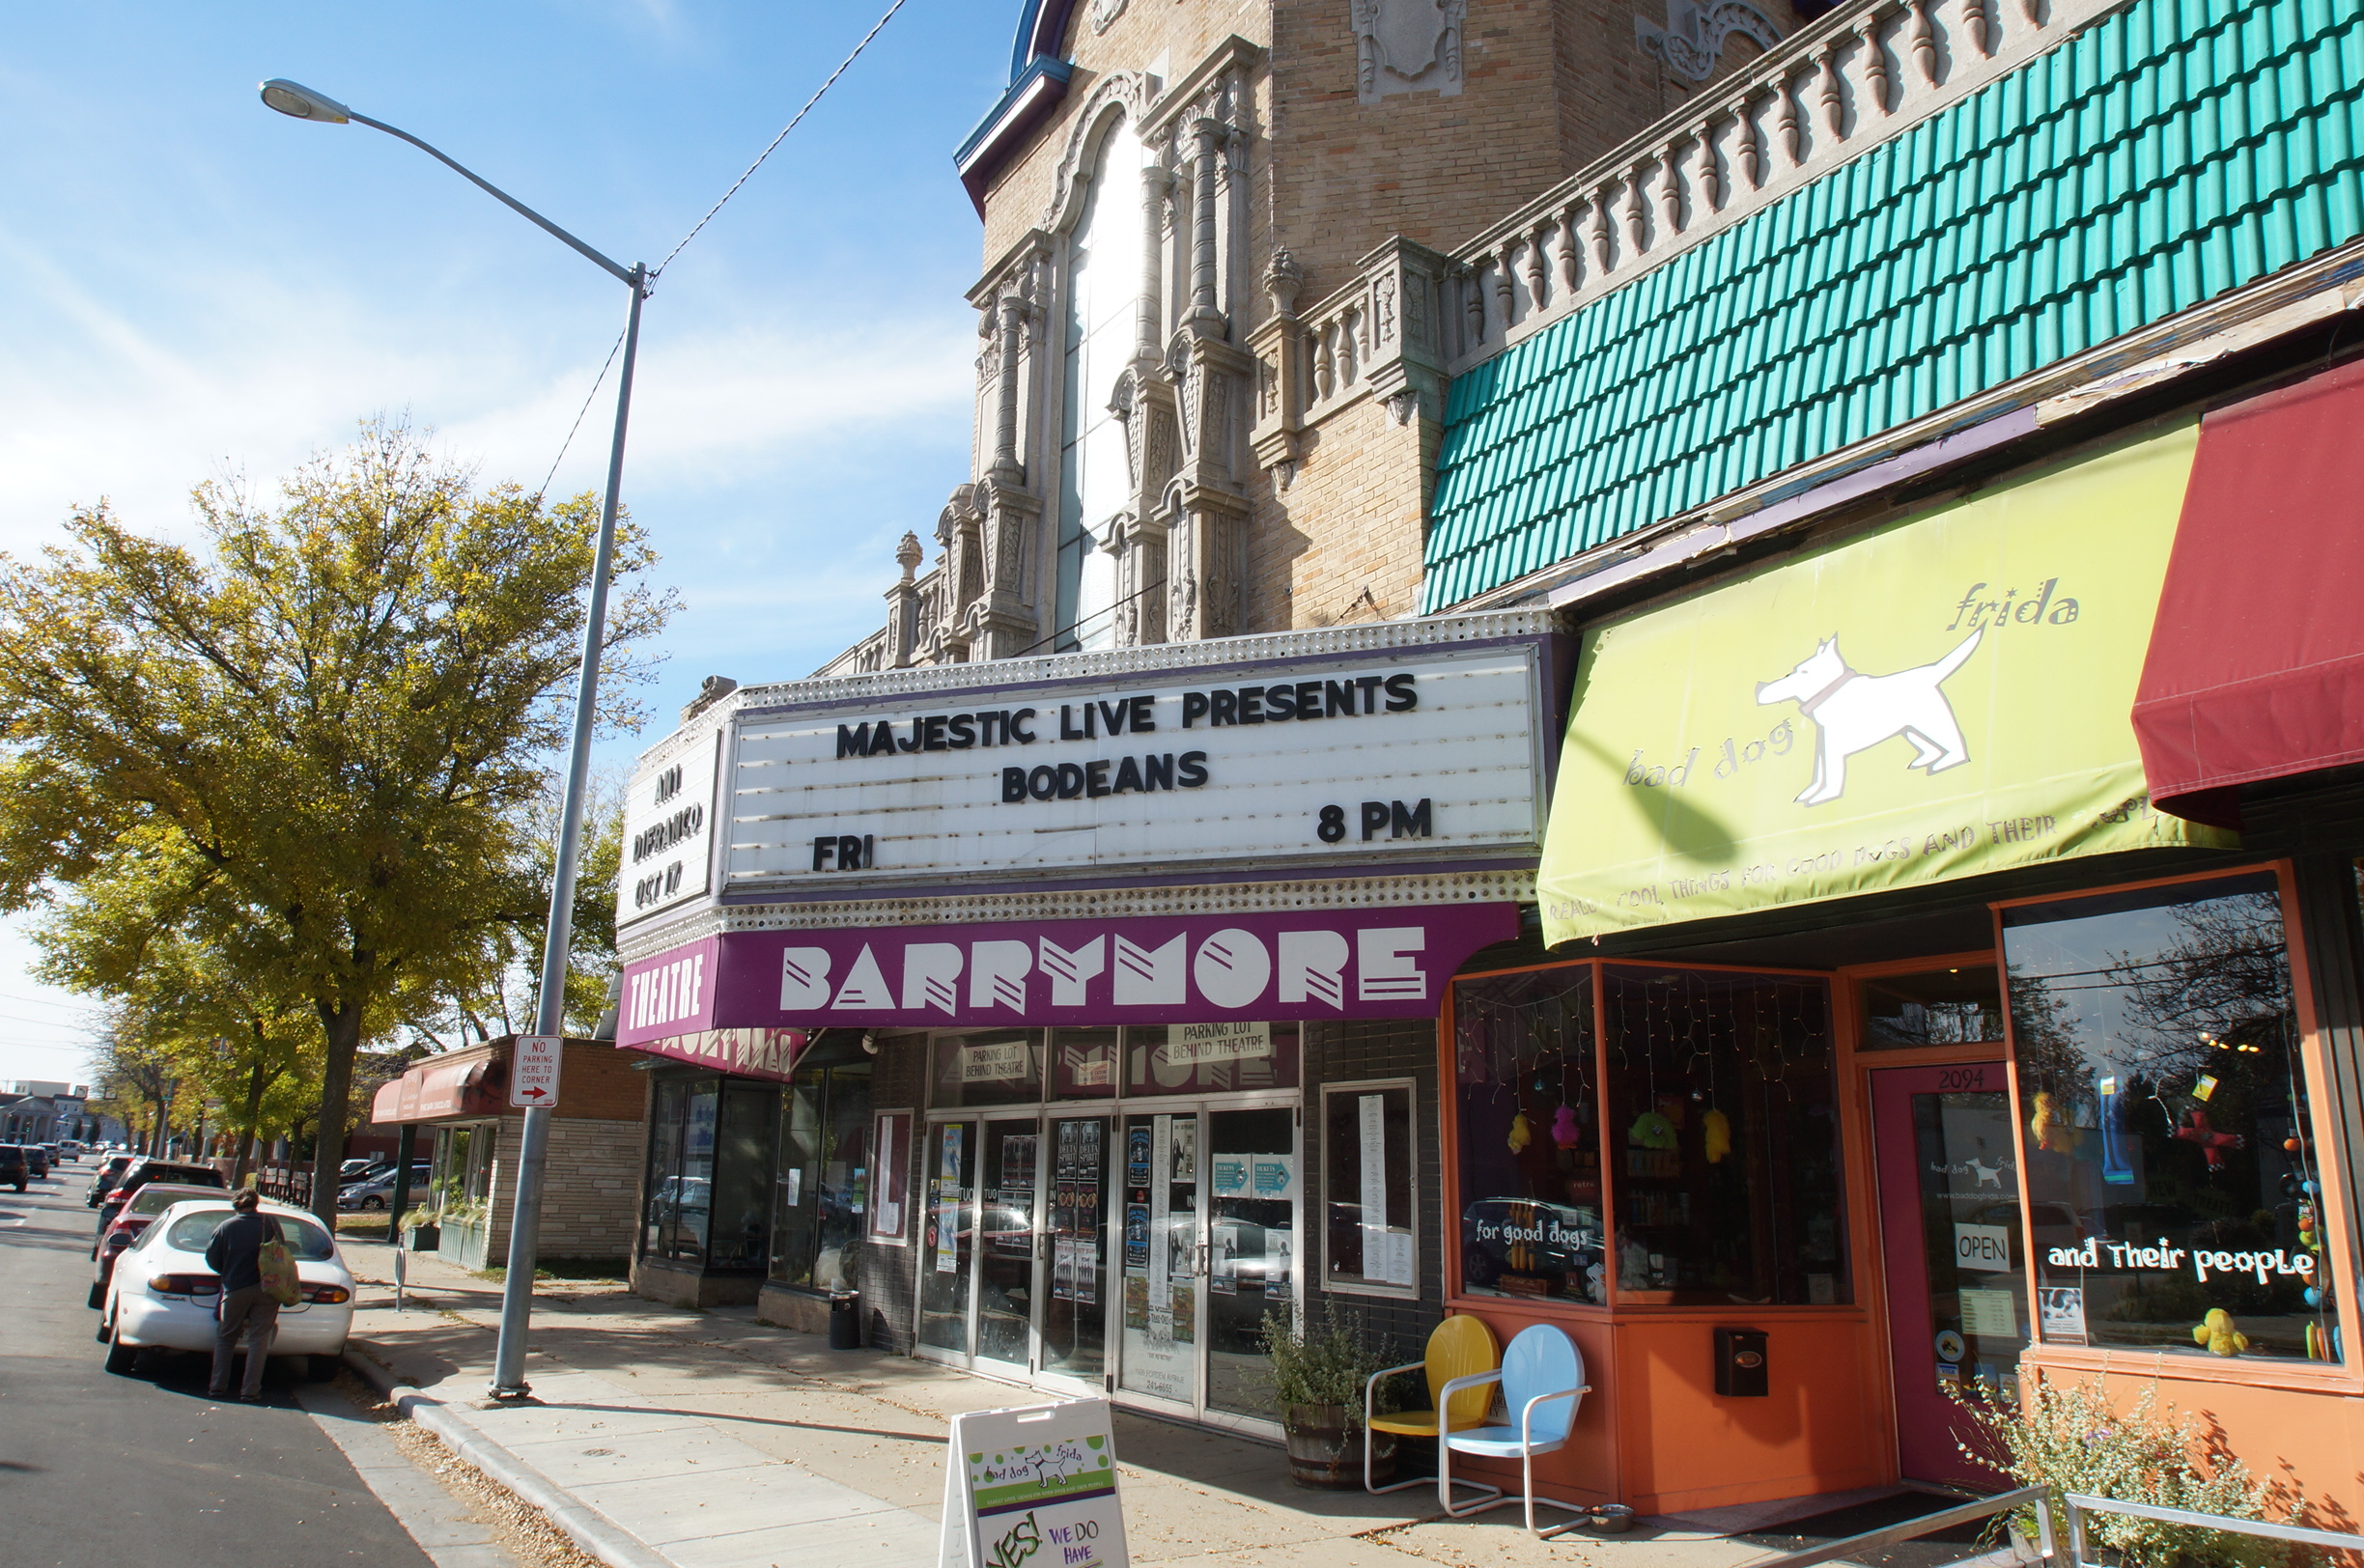 Barrymore theatre